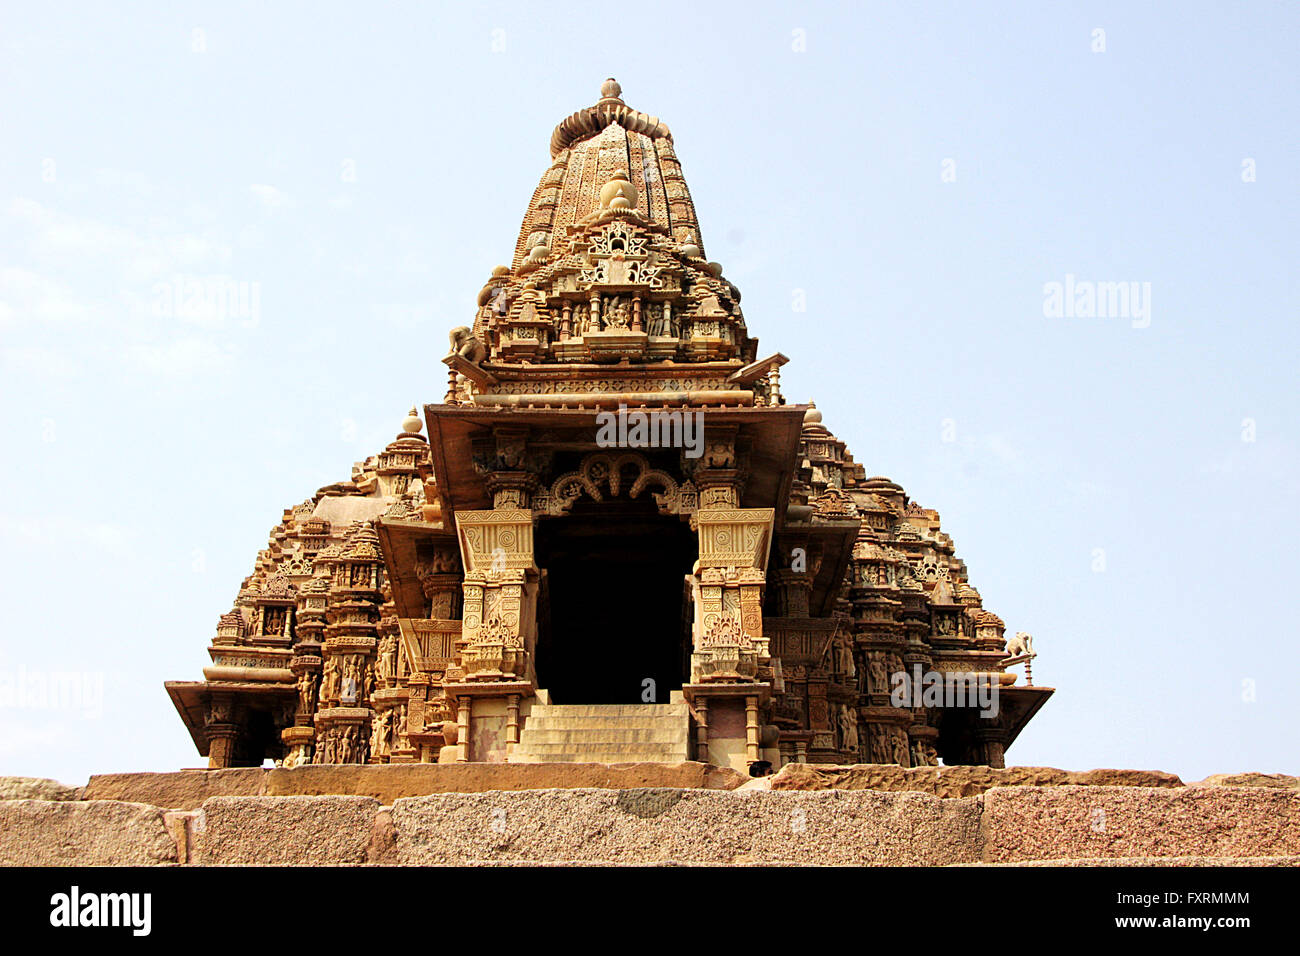 Angolo basso, vista frontale di Kandariya Mahadev tempio, sotto gruppo Occidentale di templi, Khajuraho, Madhya Pradesh, India, Asia Foto Stock